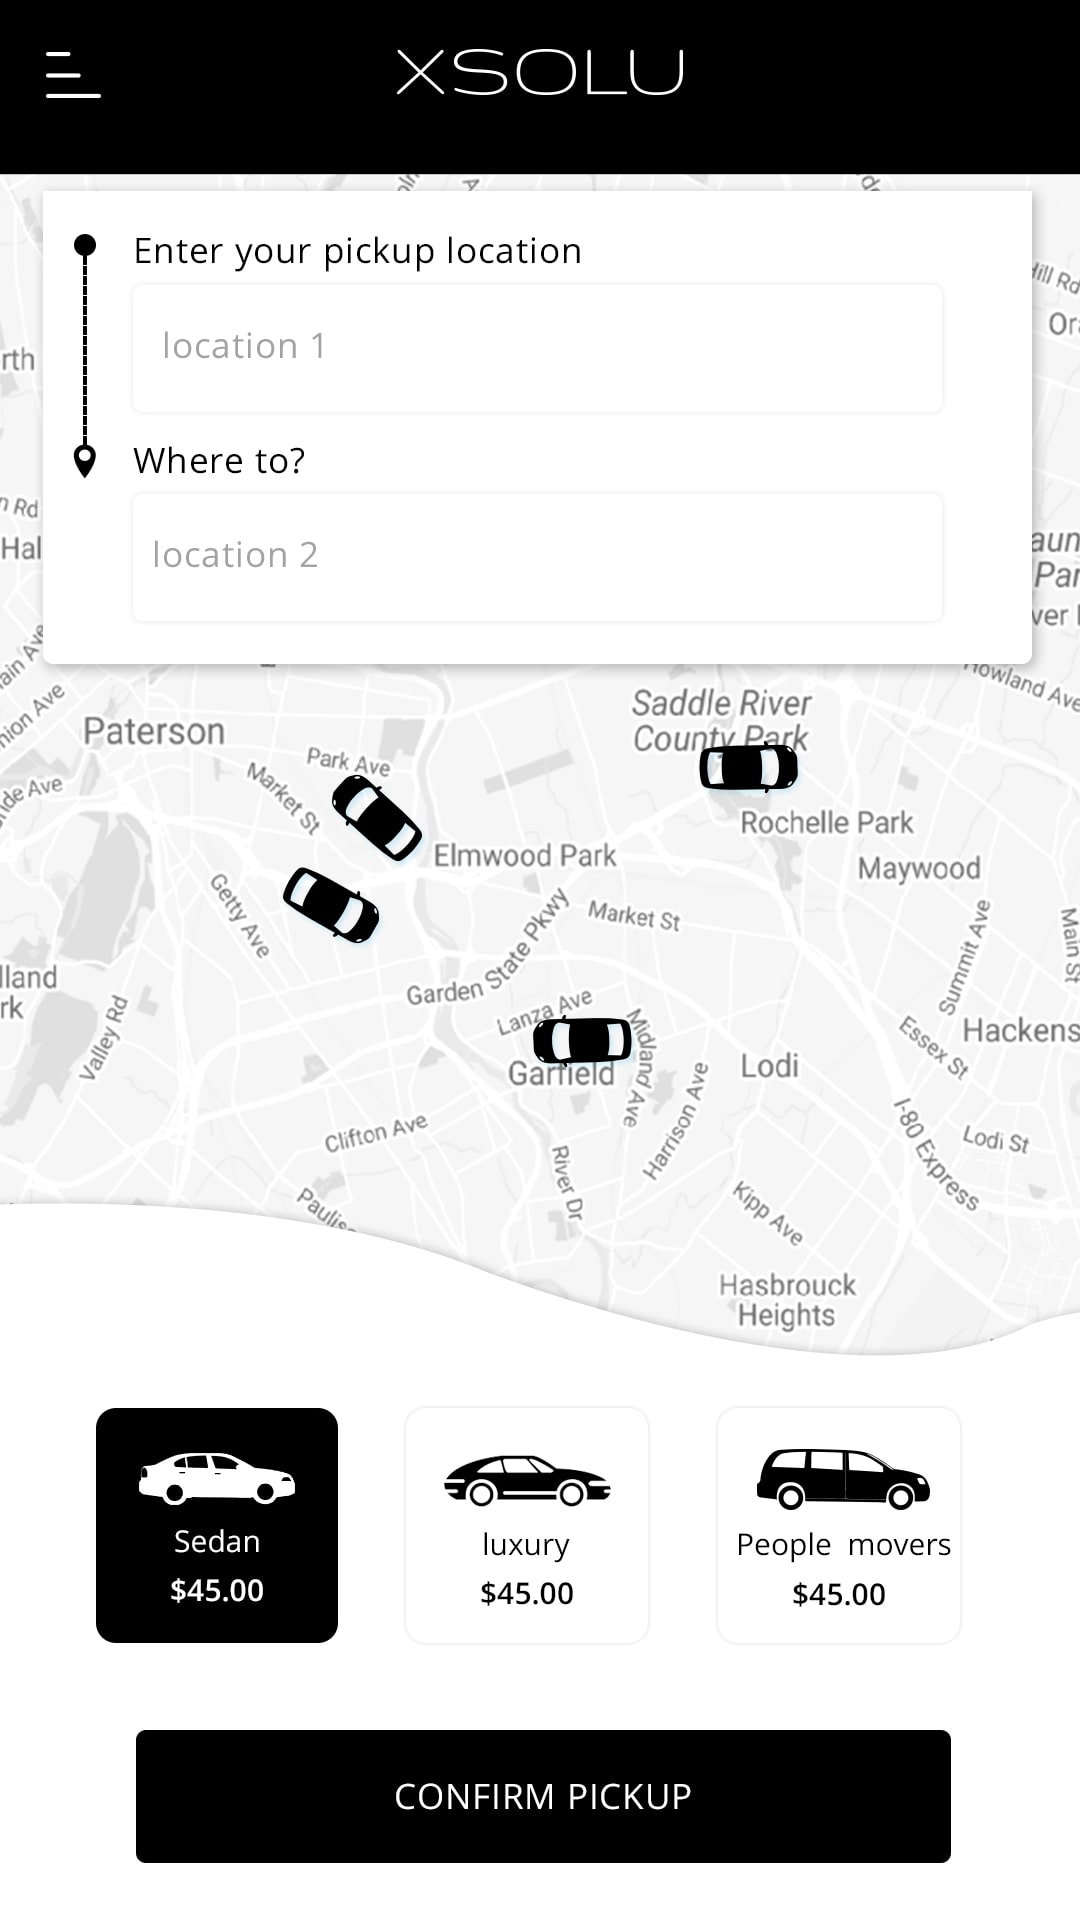 X Solu (ride sharing app) Search screen